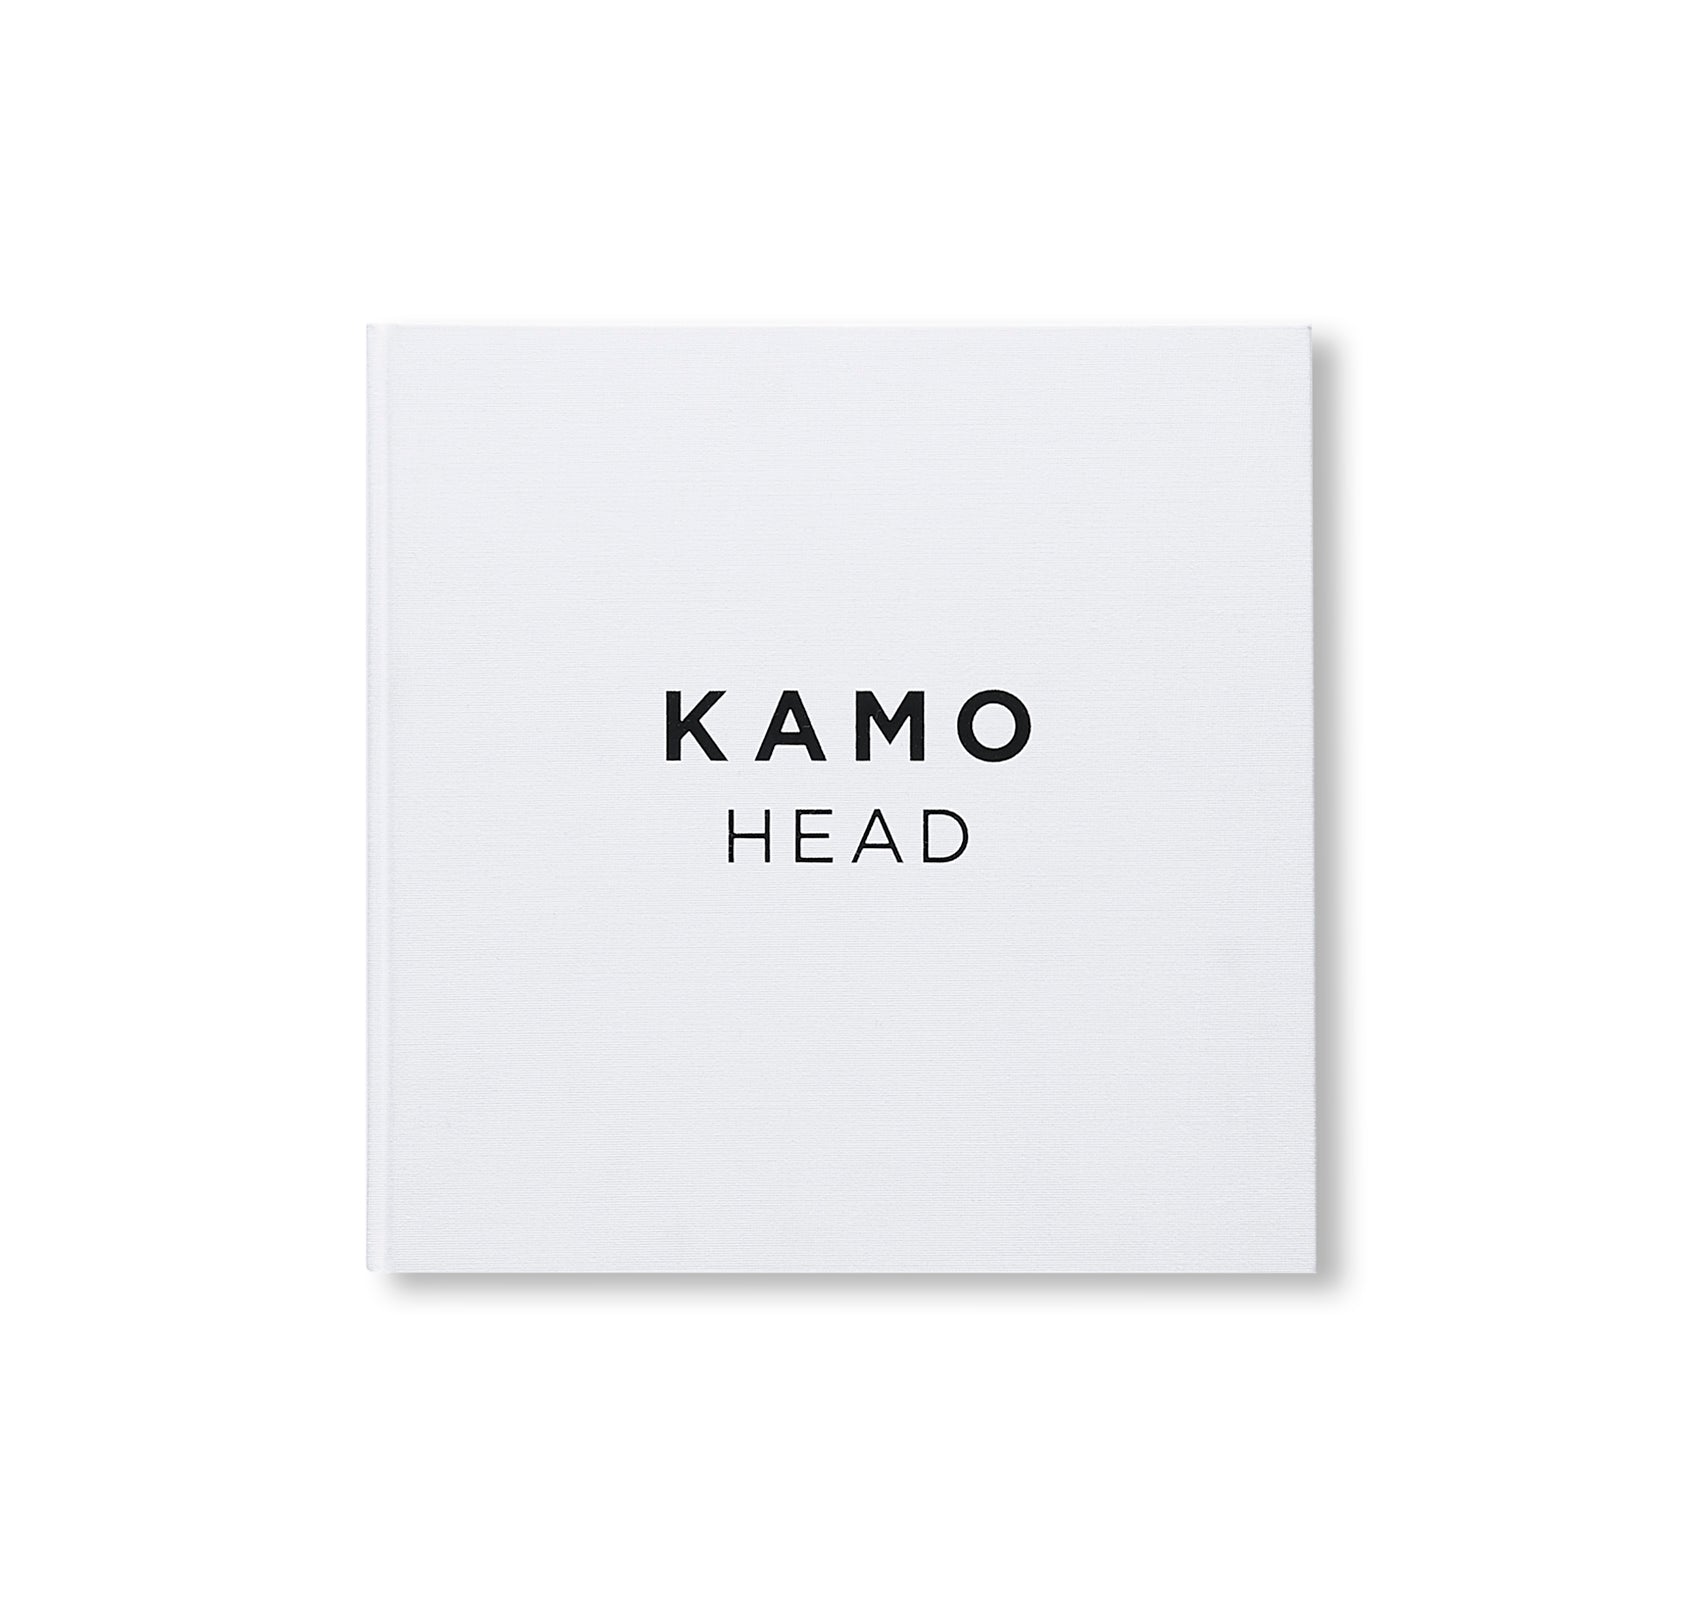 KAMO HEAD by Katsuya Kamo